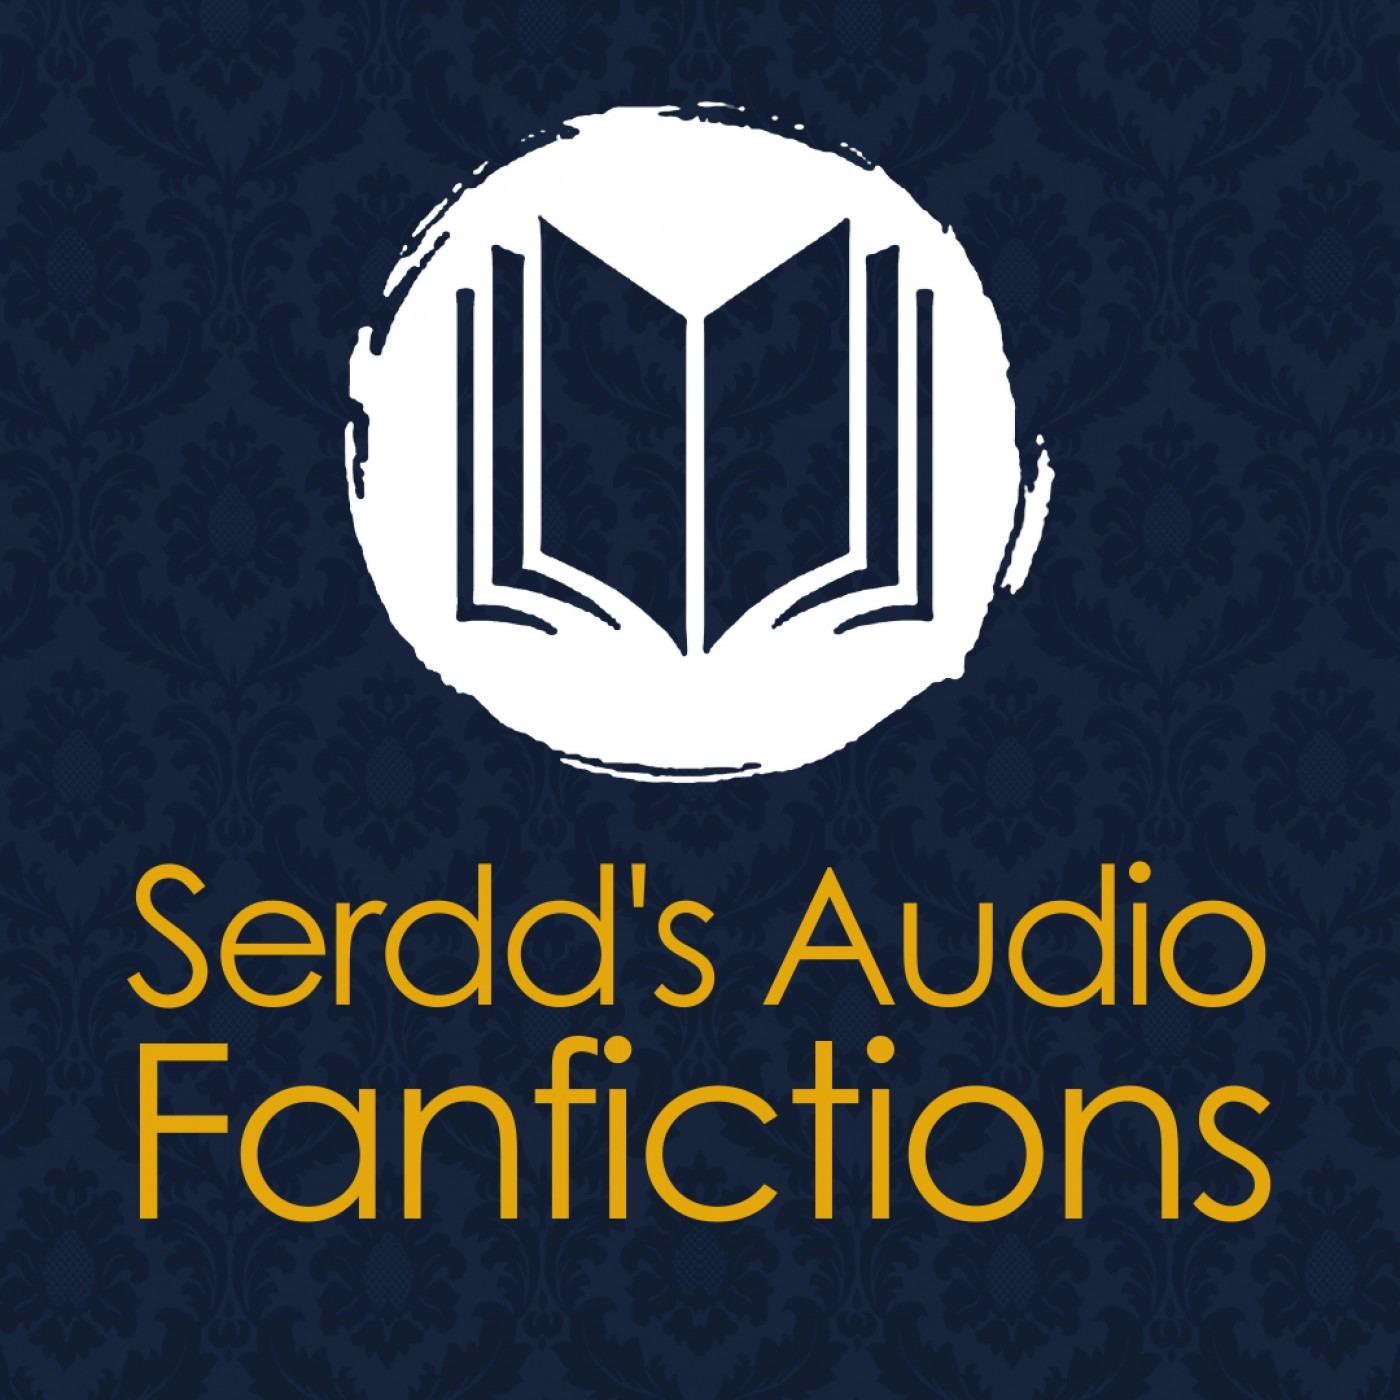 Serdd's Audio Fanfictions